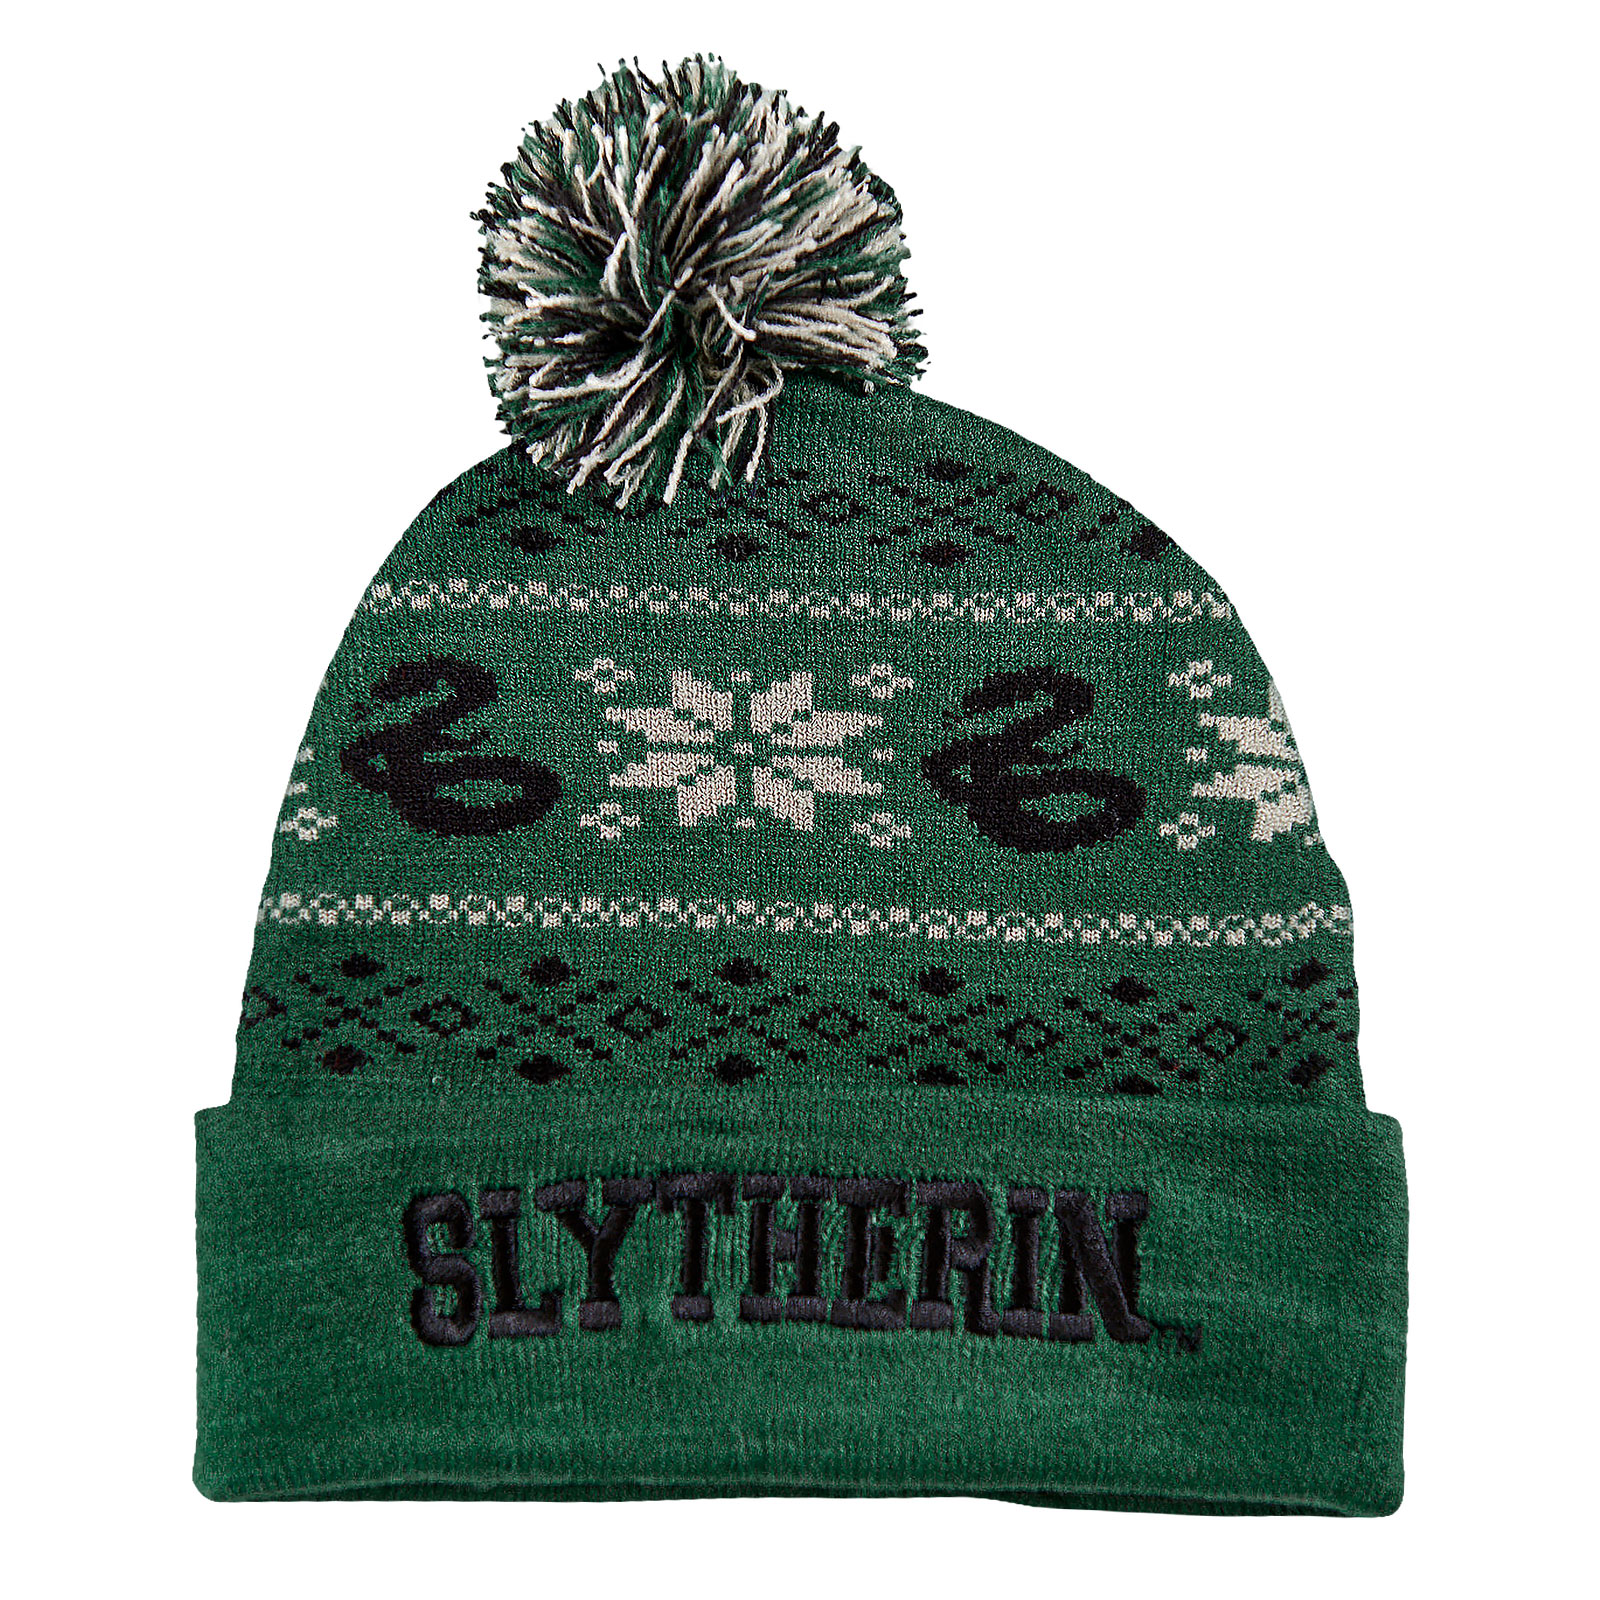 Harry Potter - Slytherin Norwegermütze grün